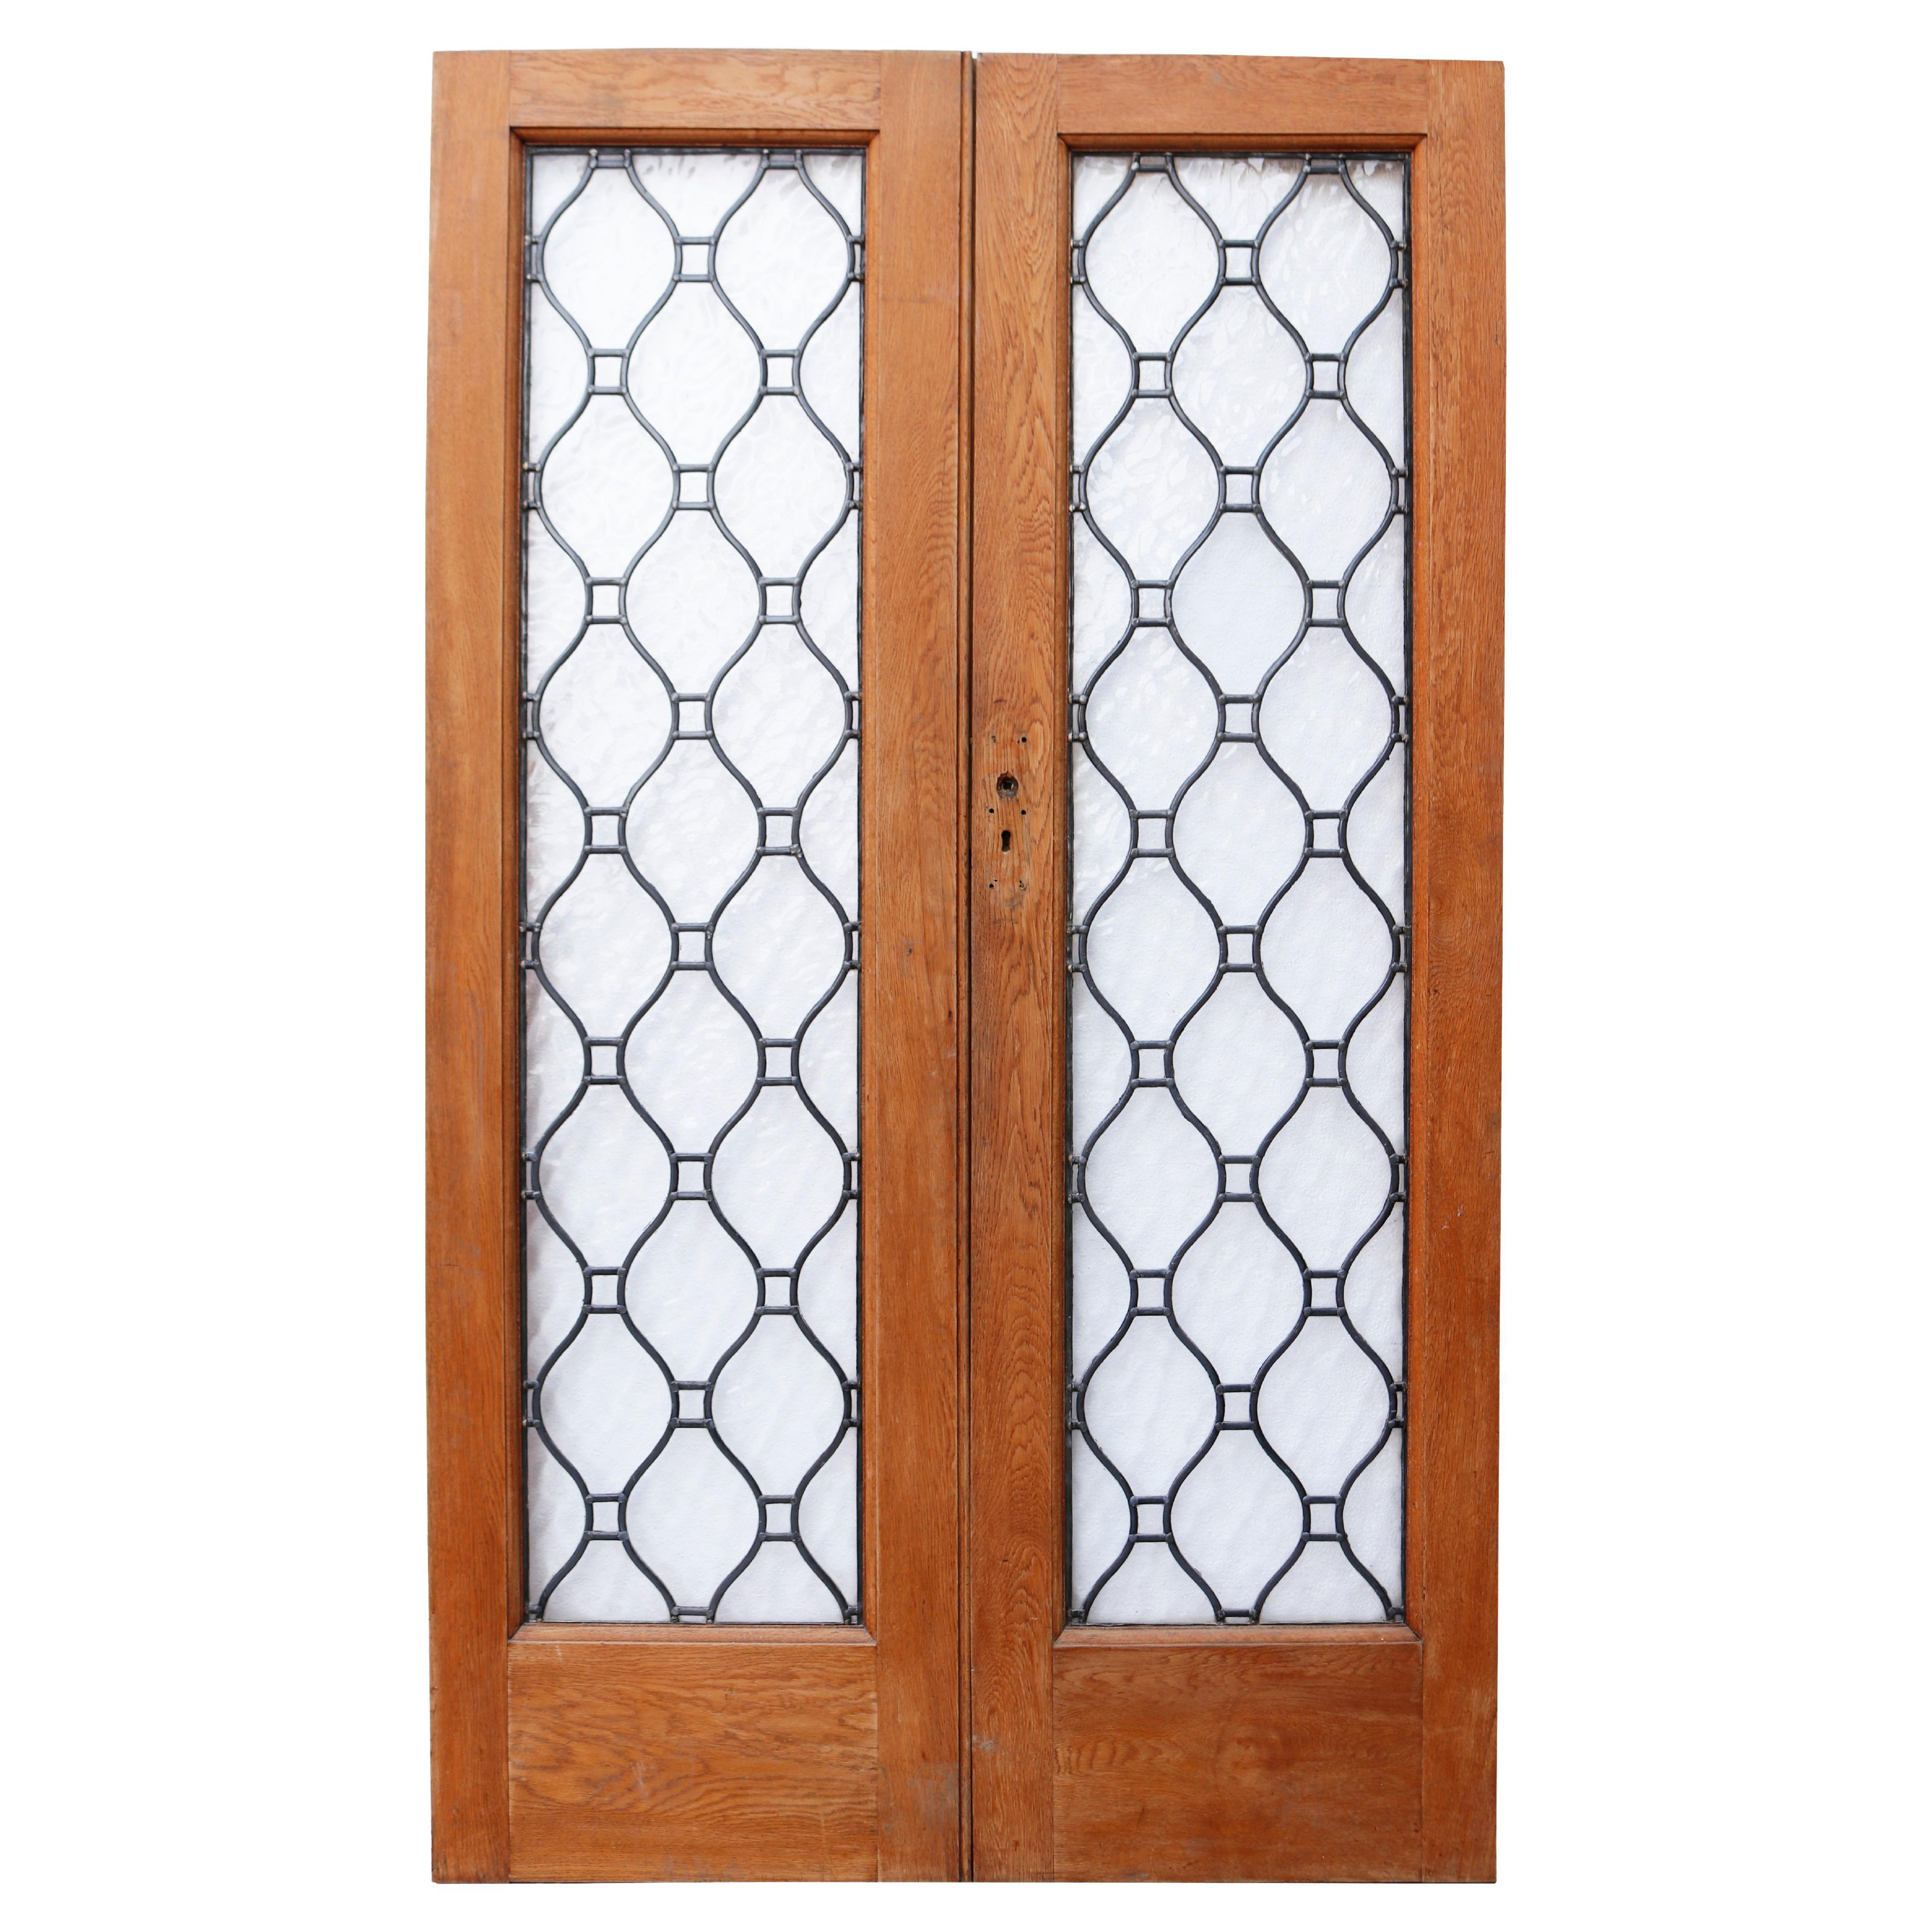 Set of Reclaimed Oak Doors